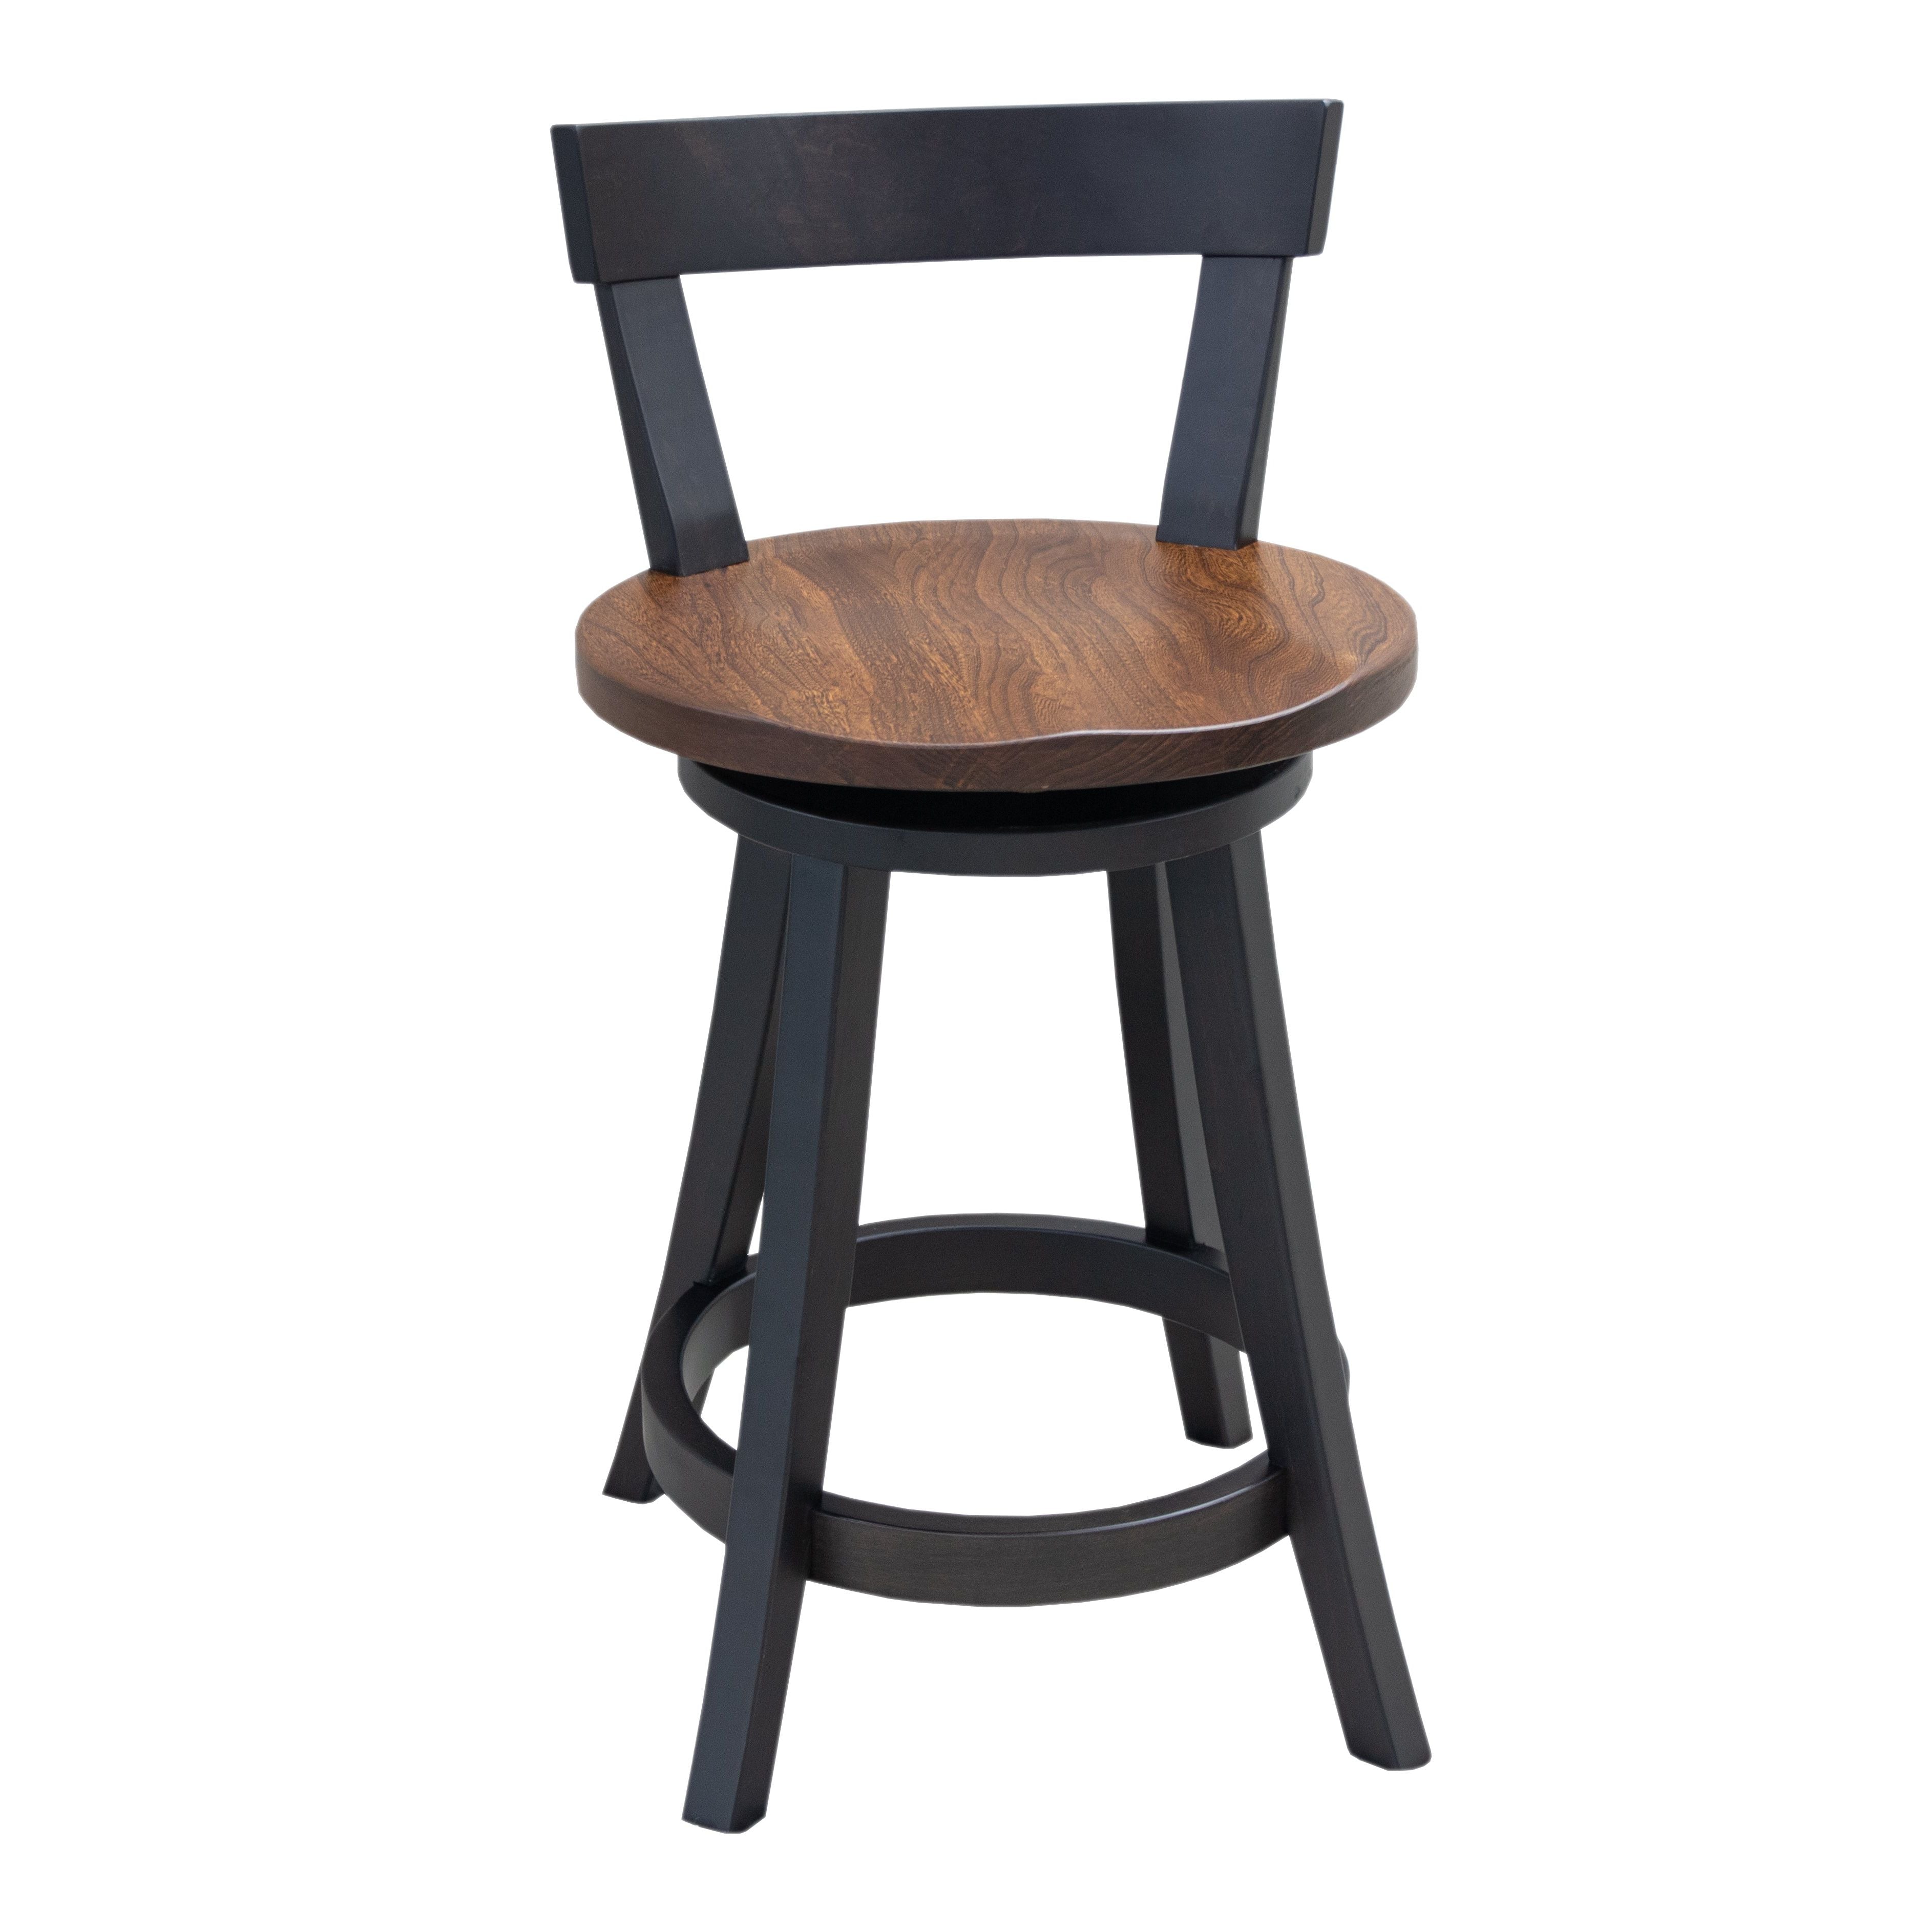 24" Turnstone Swivel Bar Chair with Wood Seat